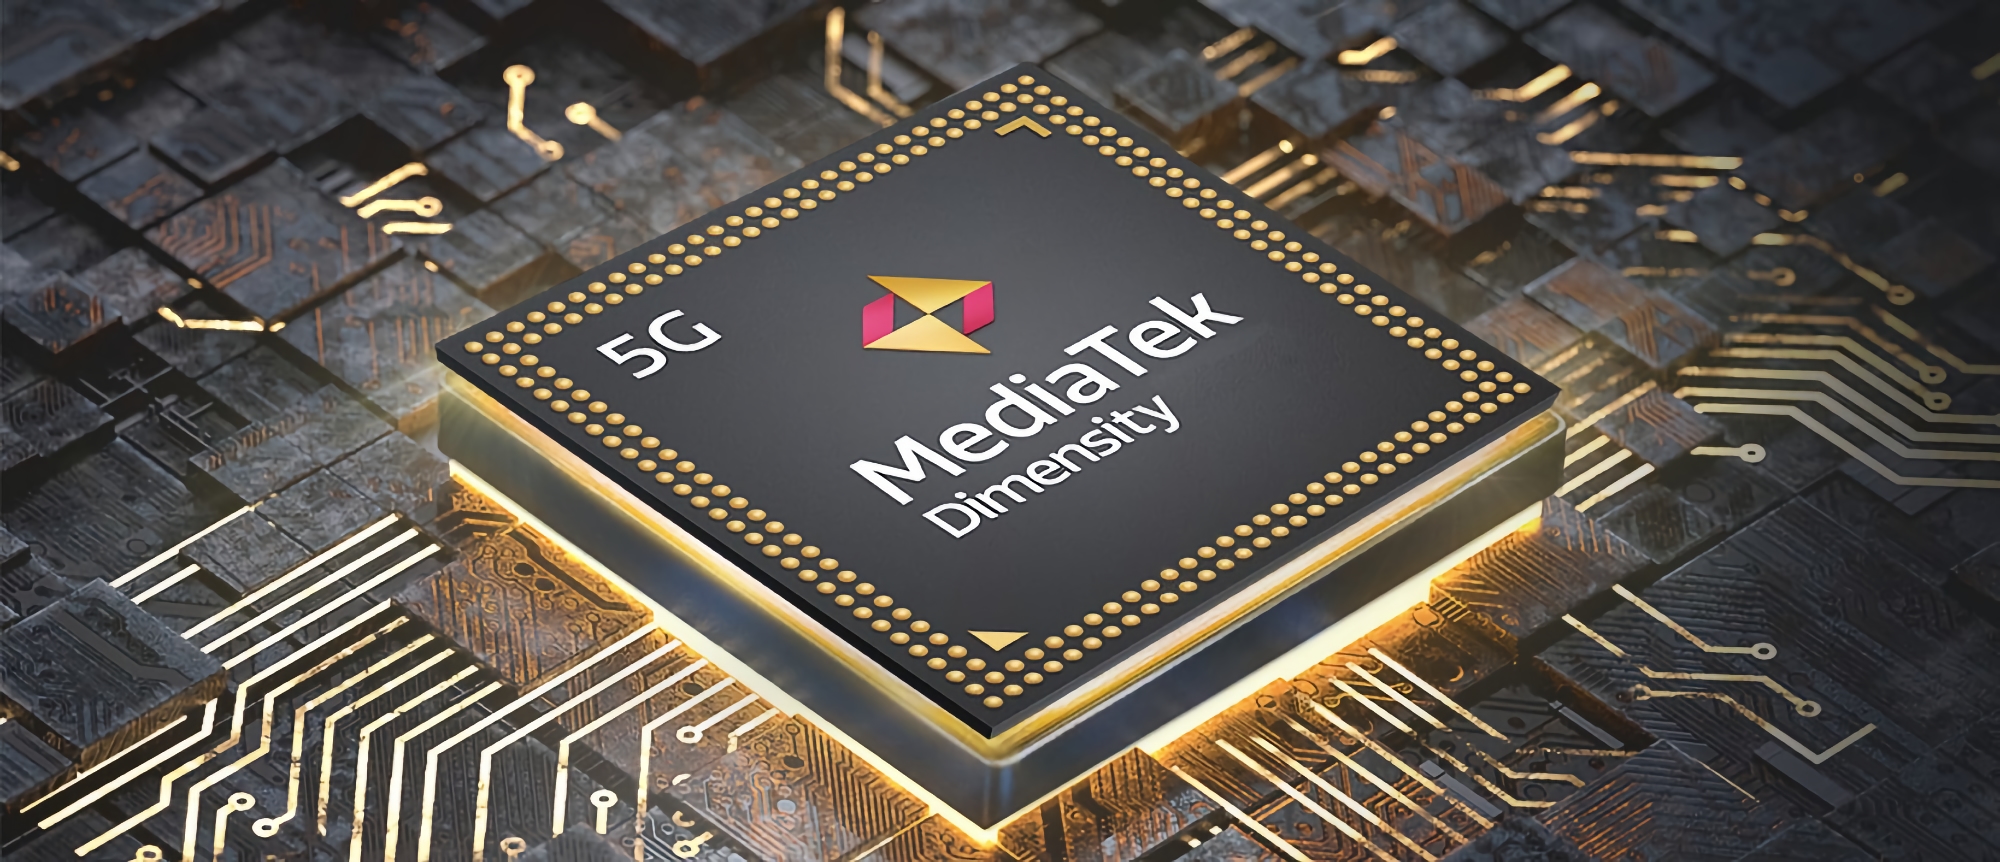 Insider: MediaTek introdurrà un processore Dimensity 8100 a 5 nanometri a marzo